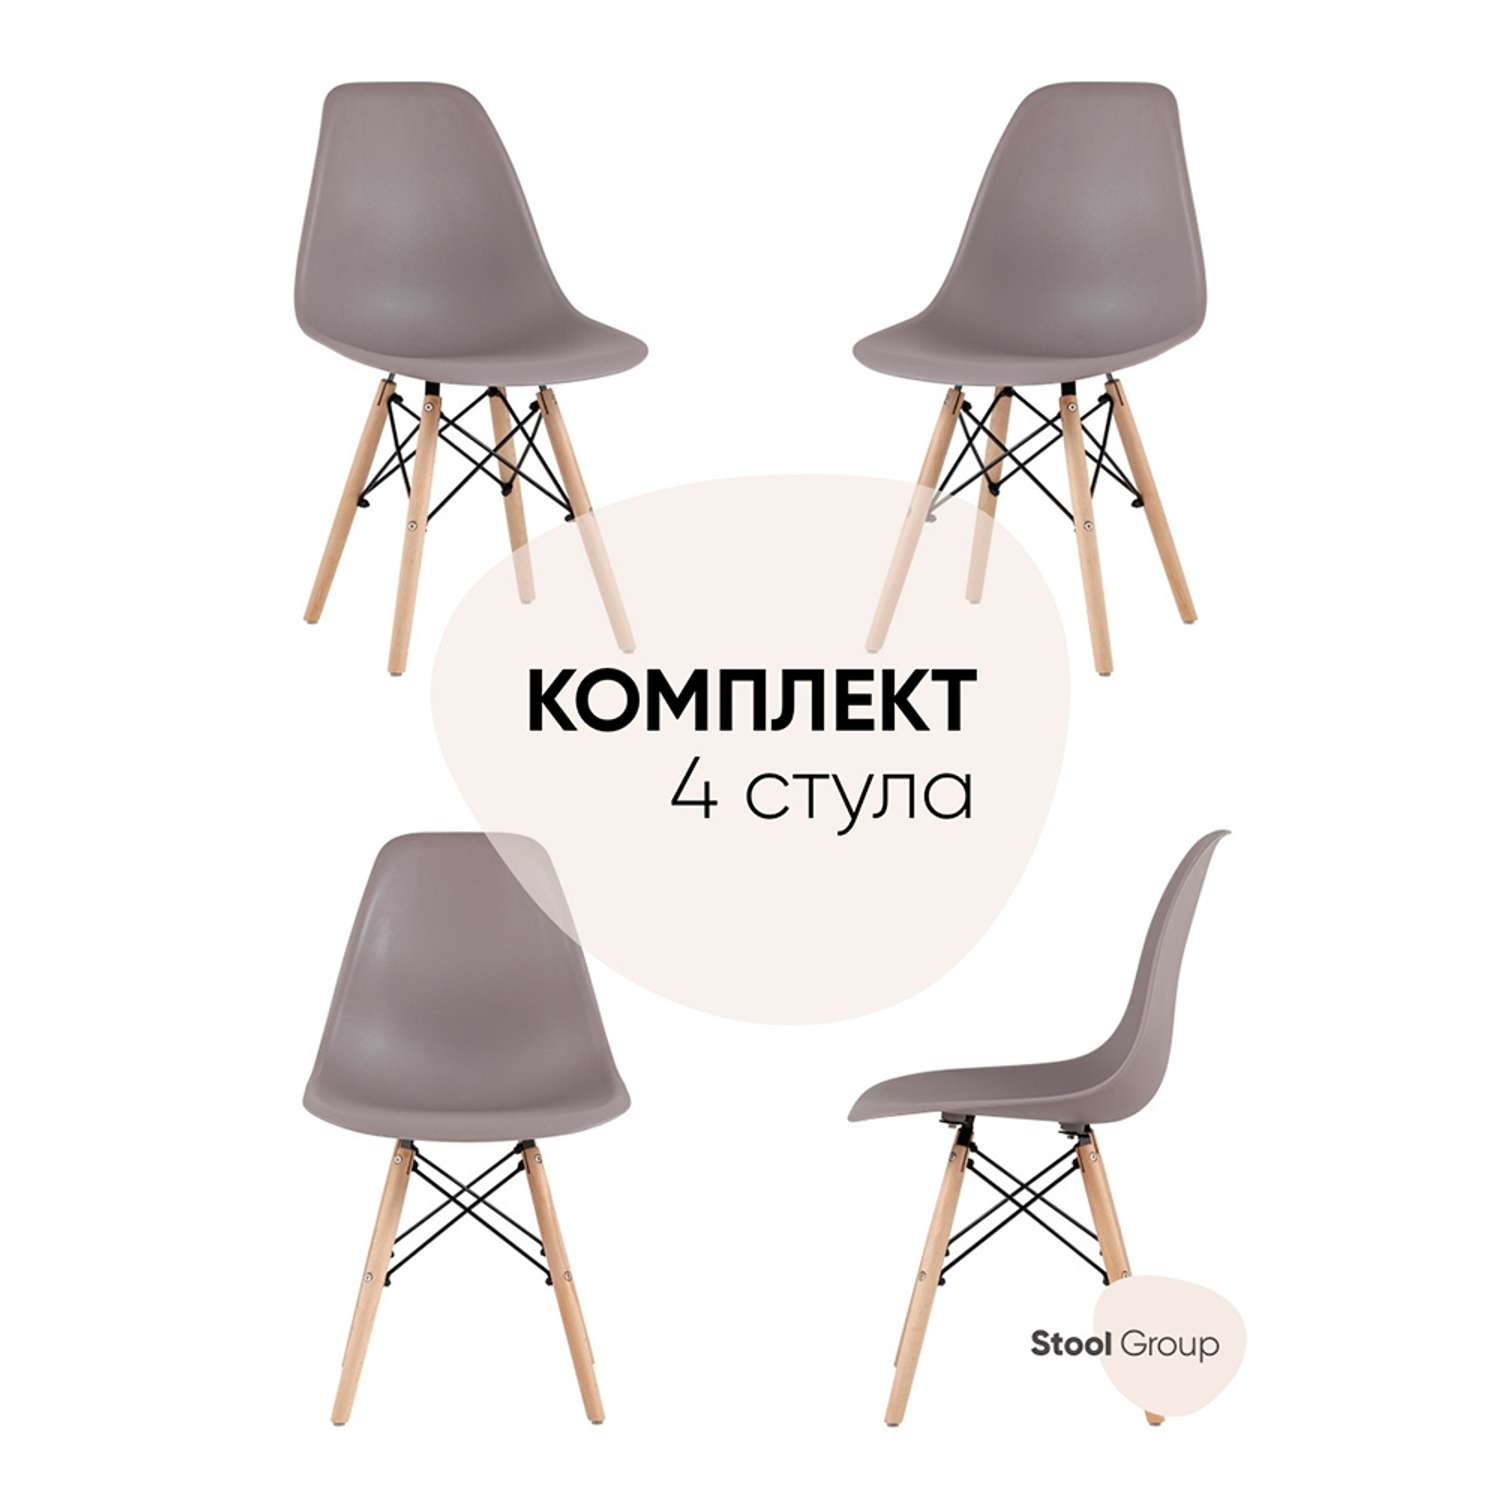 Комплект стульев Stool Group DSW Style серый - фото 1